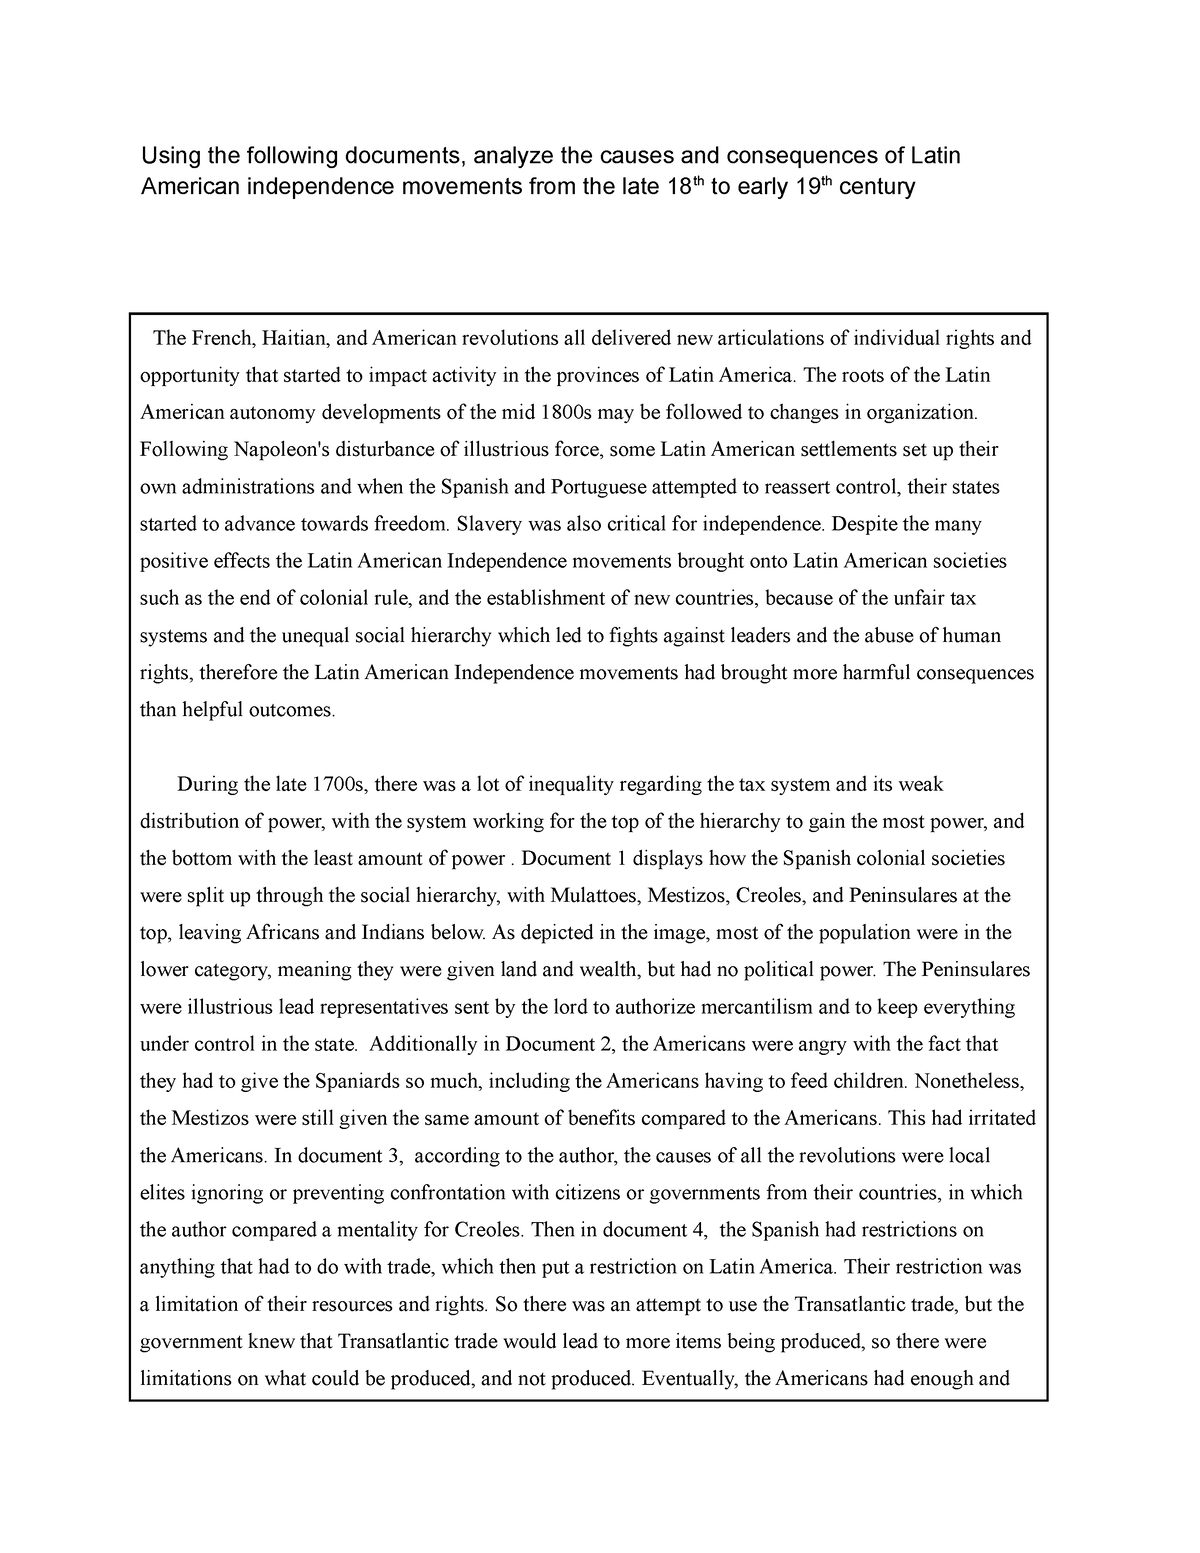 latin american revolution thesis statement